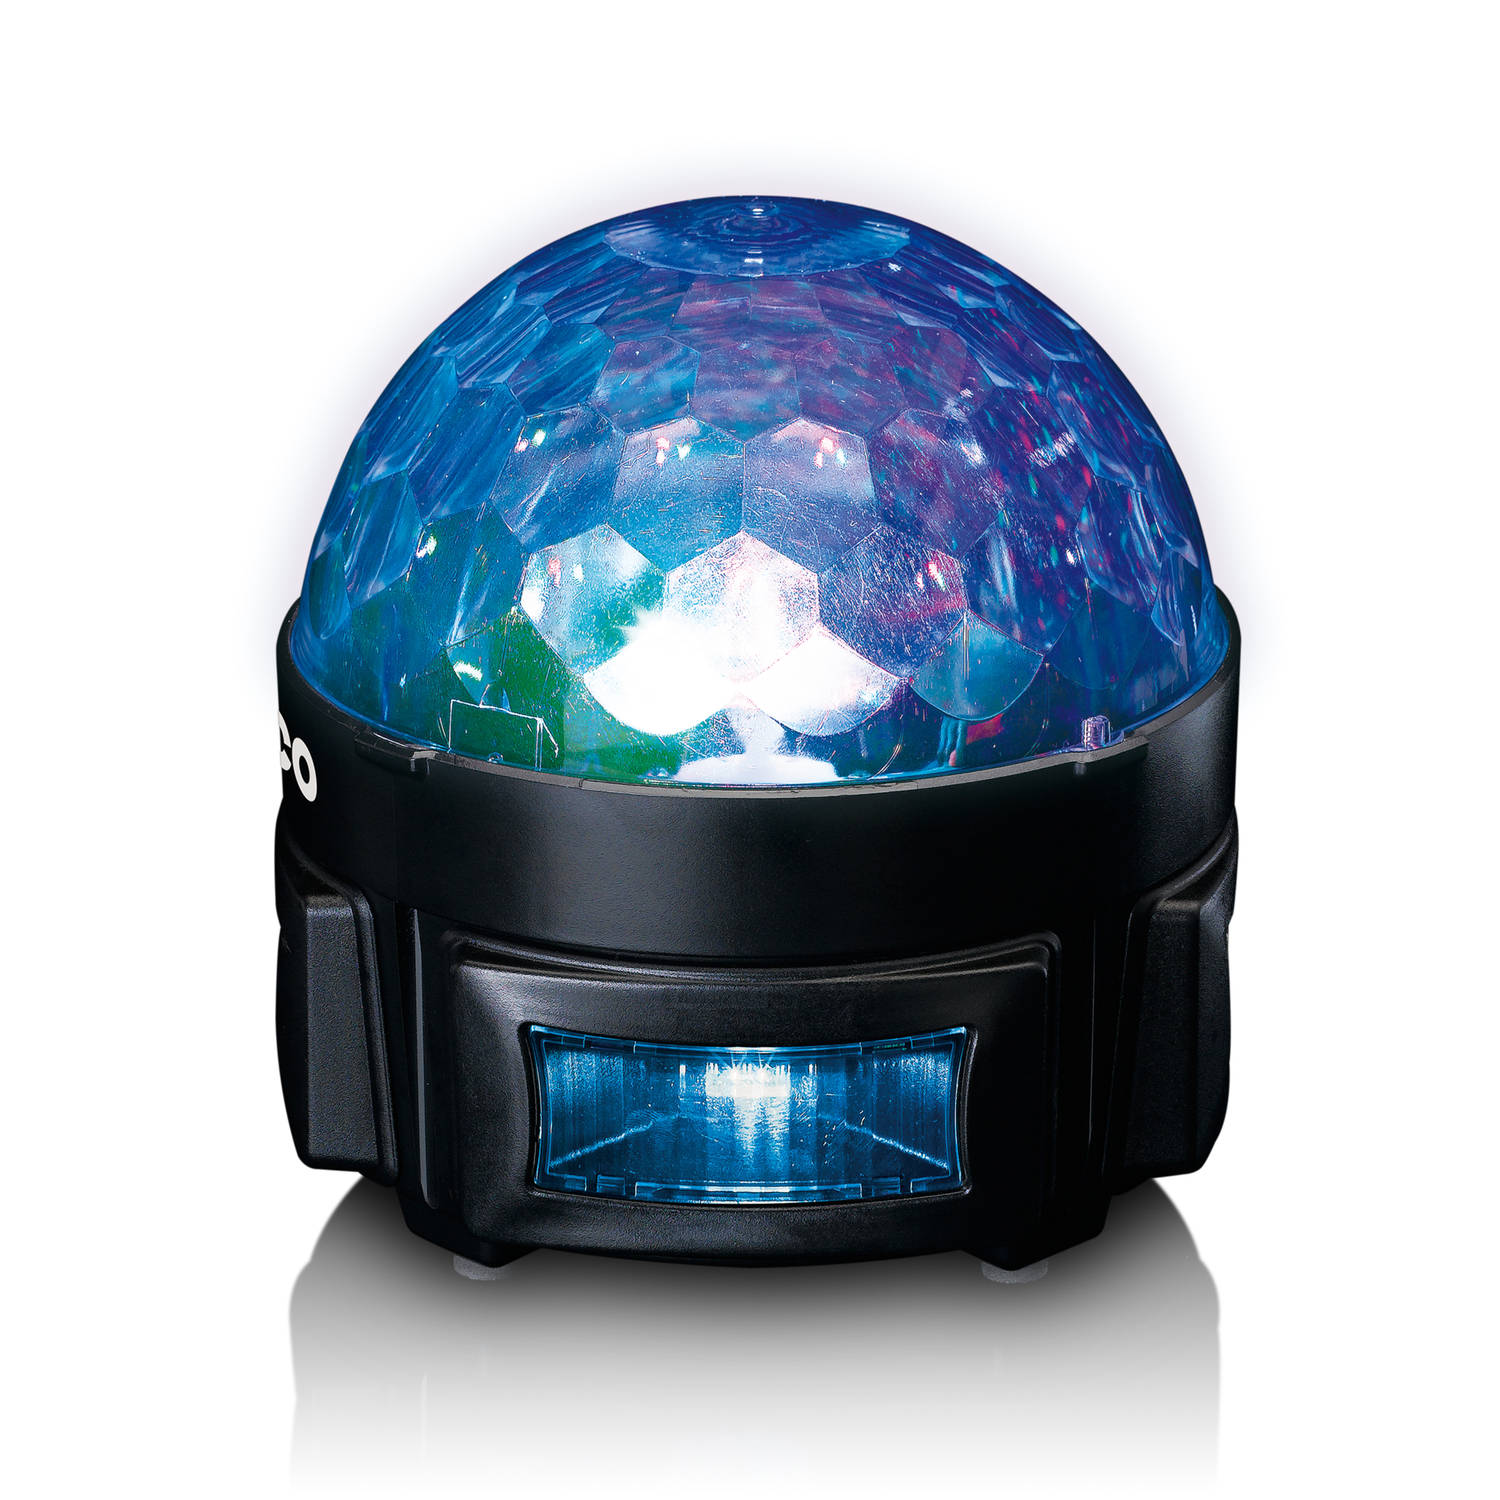 Draagbare oplaadbare LED lamp met discobal | PL-201BK Blokker Lenco